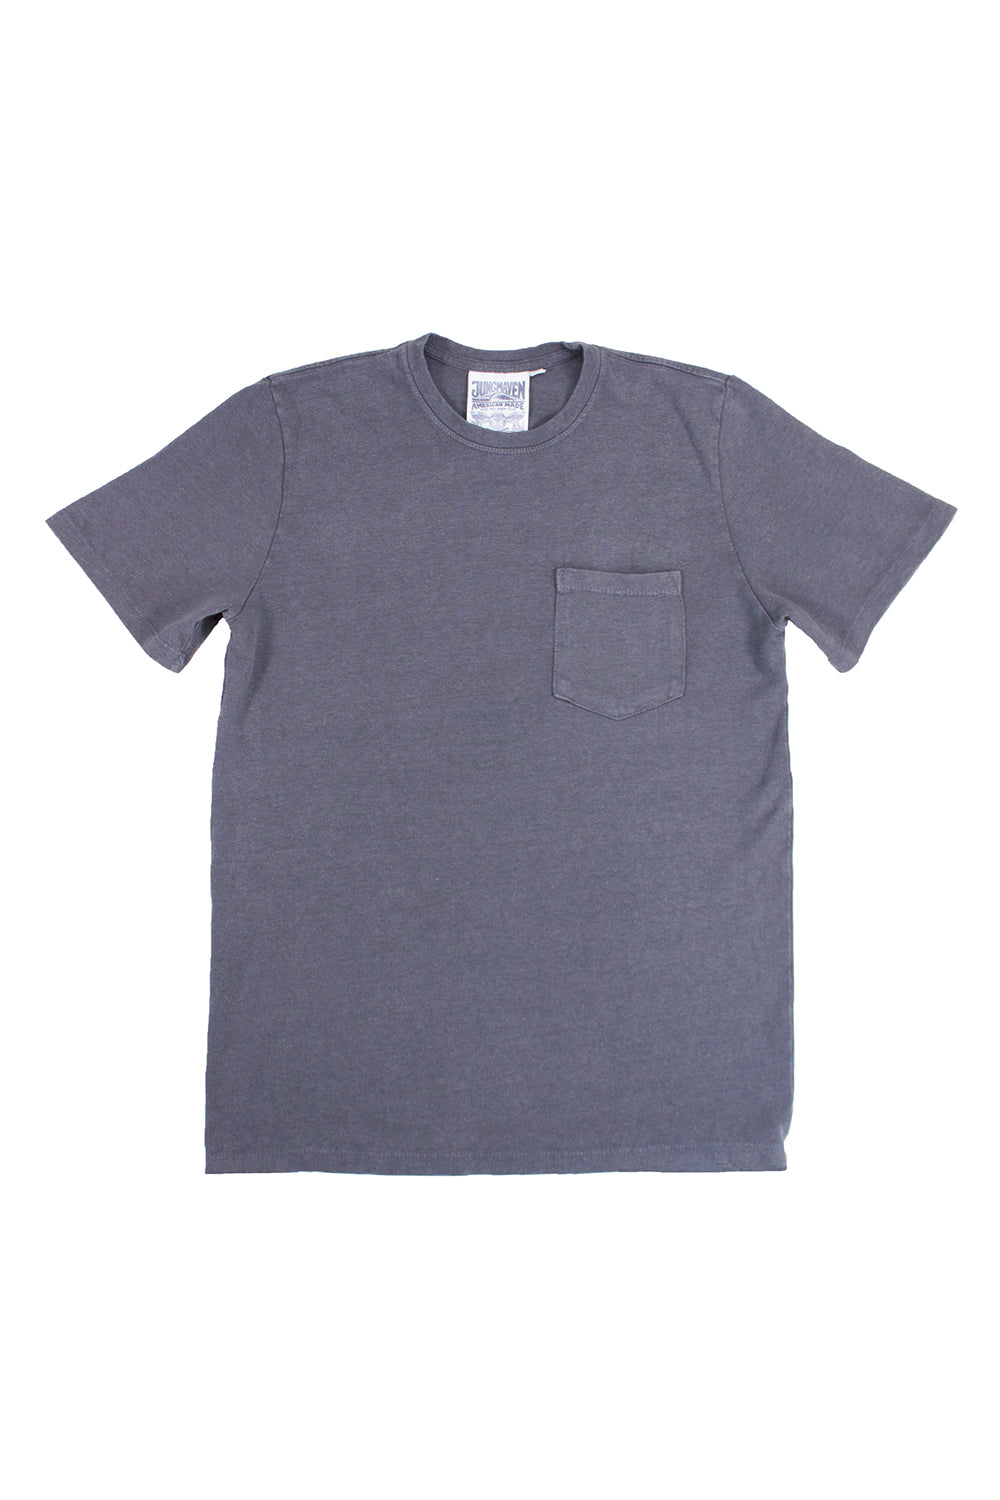 Boulder Pocket Tee | Jungmaven Hemp Clothing & Accessories / Color: Diesel Gray